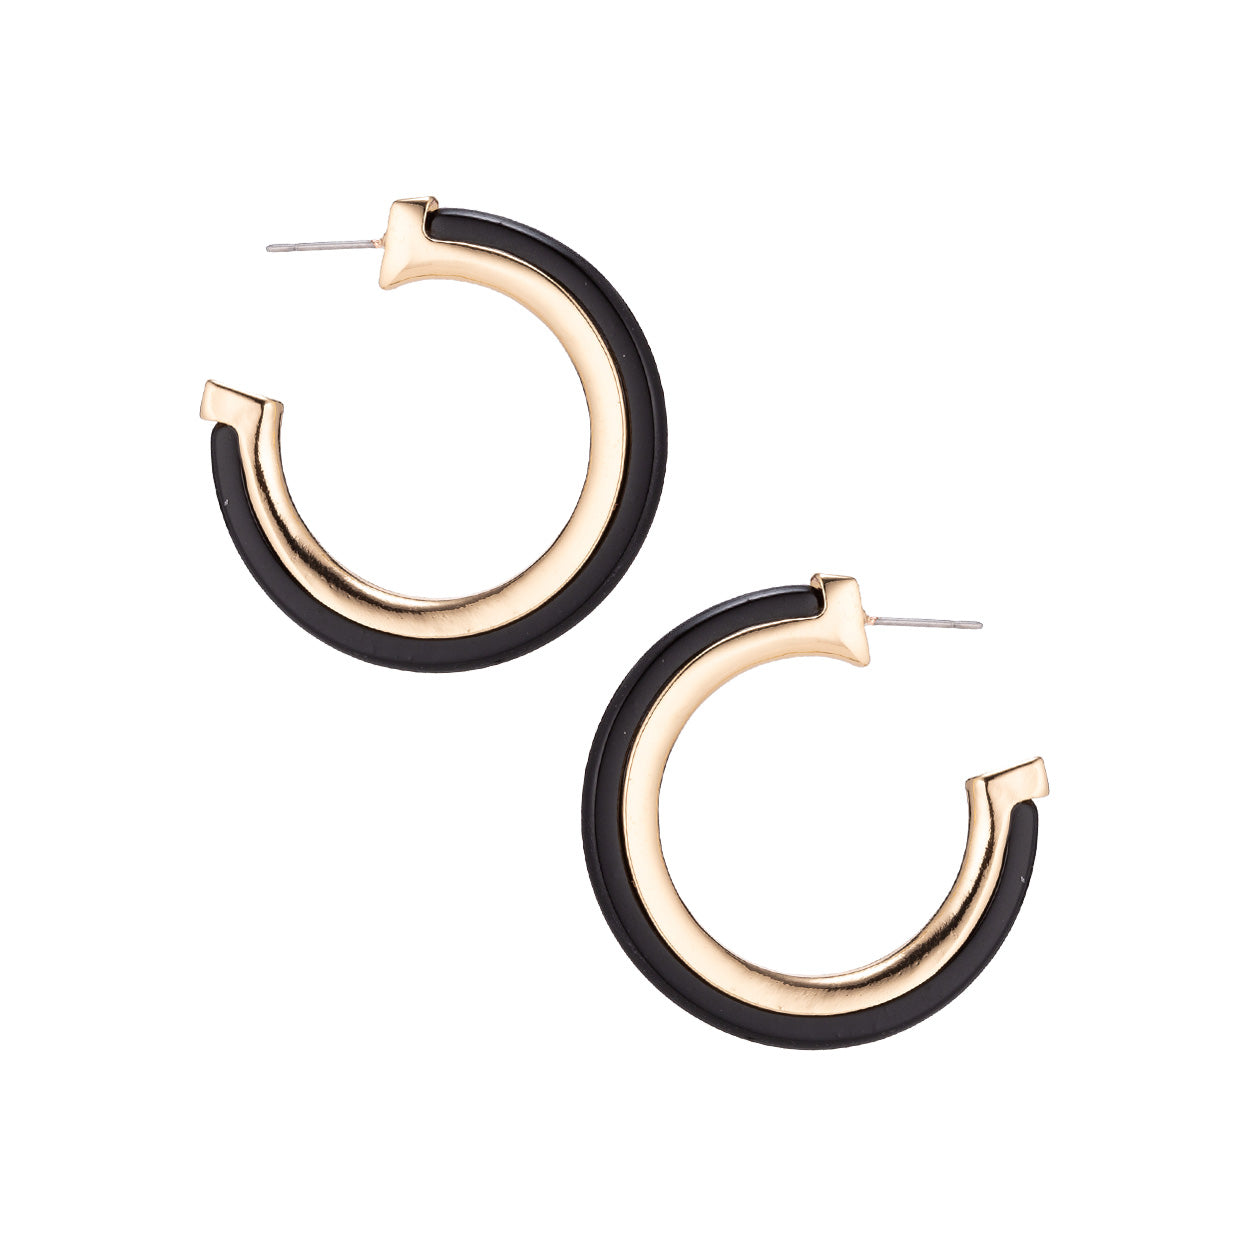 Gold Trim & Acrylic Open Hoop Earring - In 3 Colors